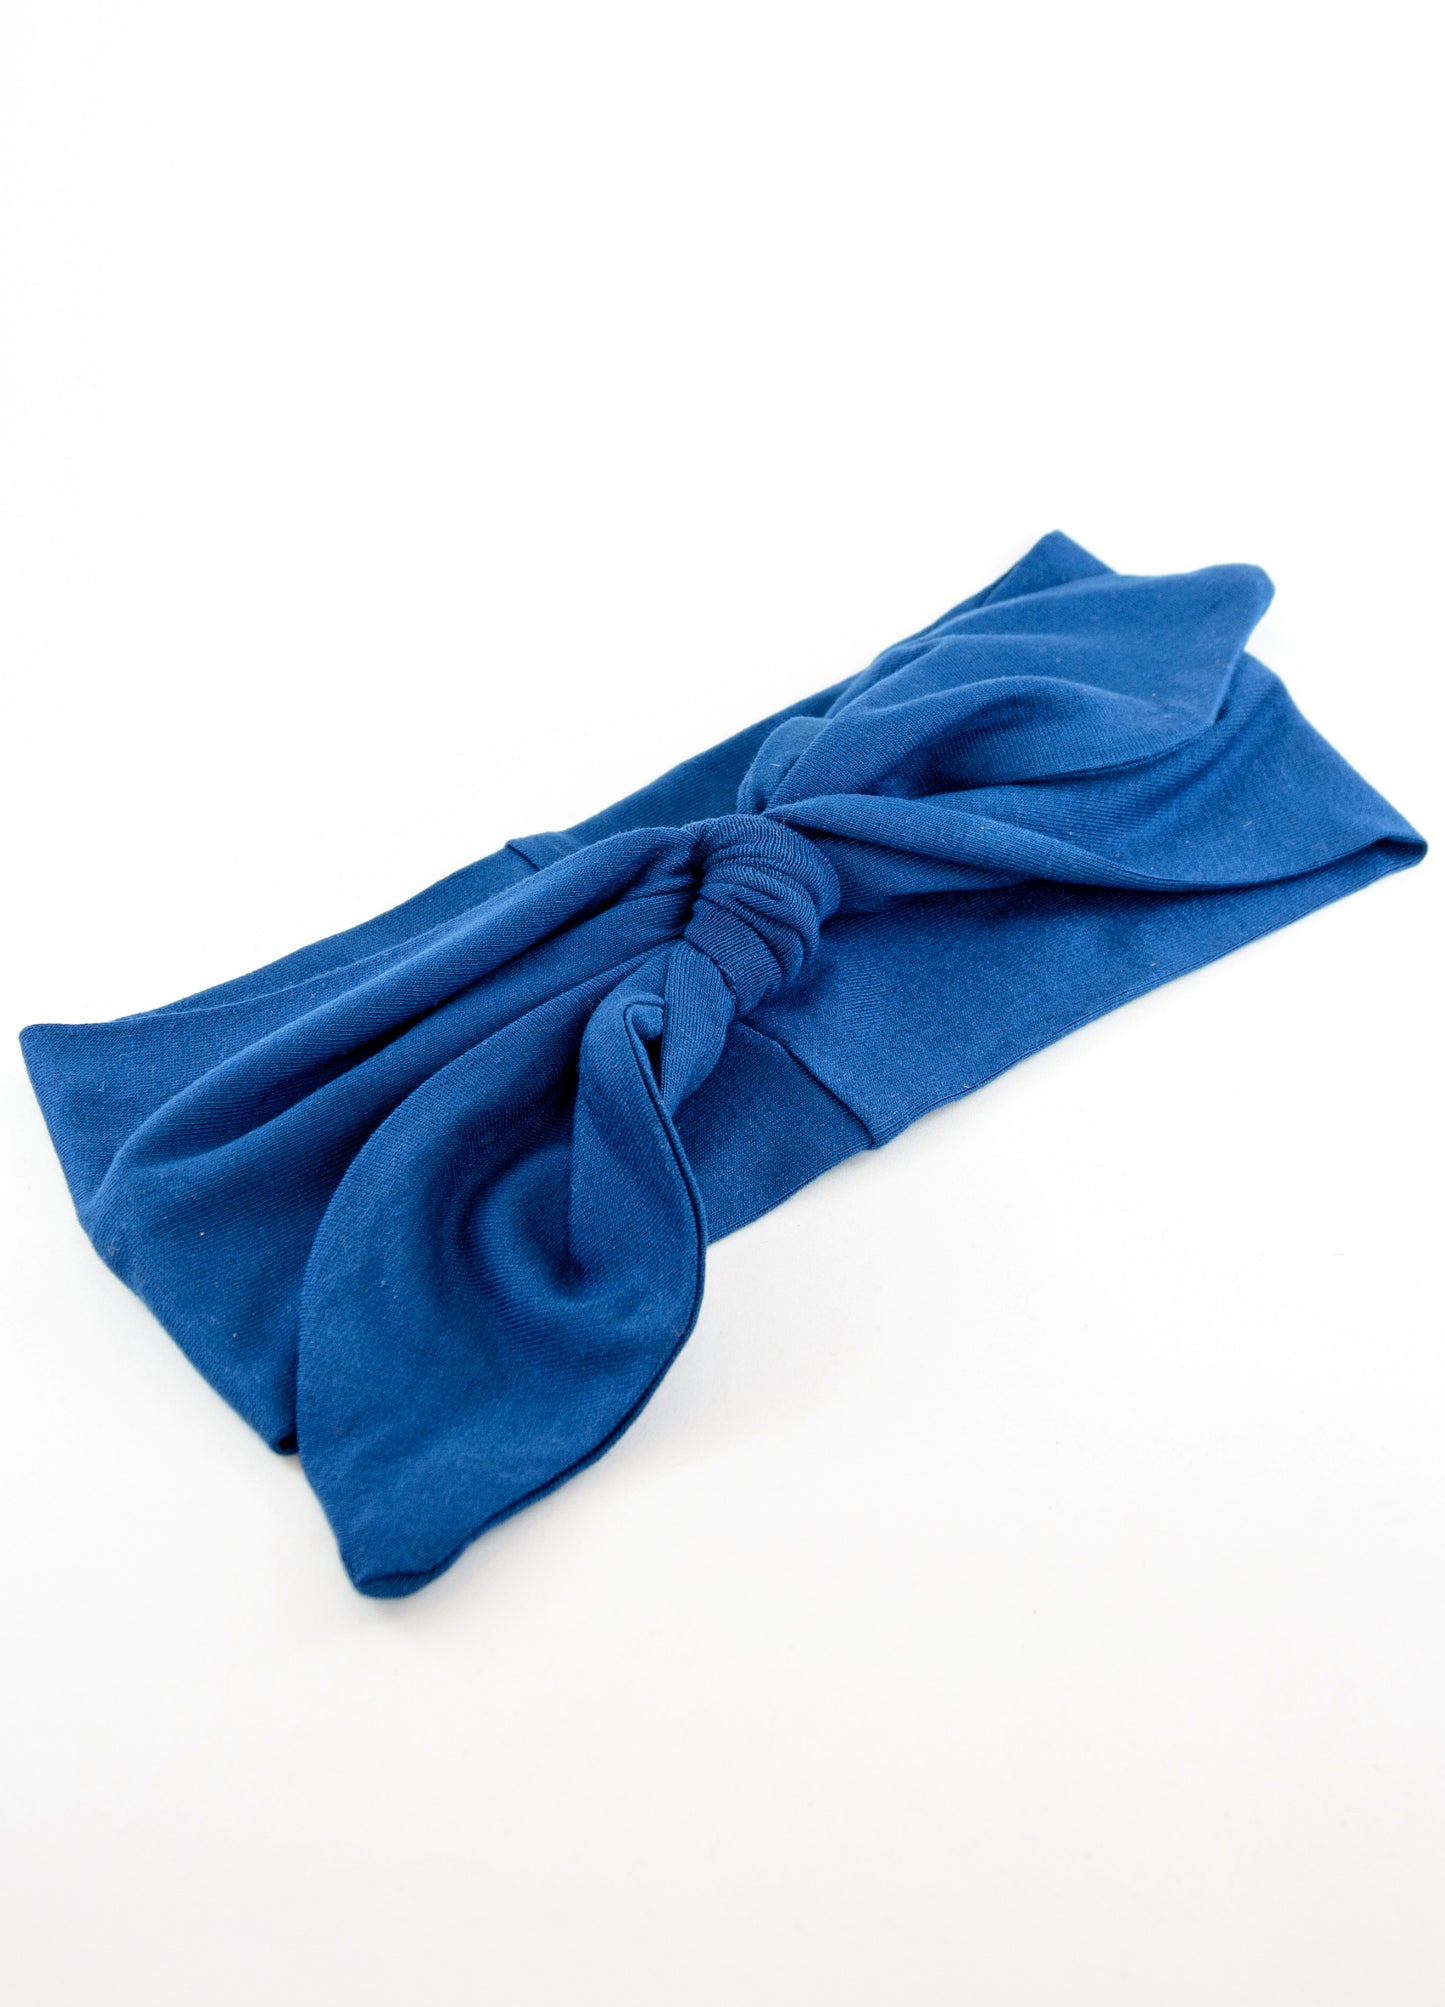 Juno tie headband in pacific blue